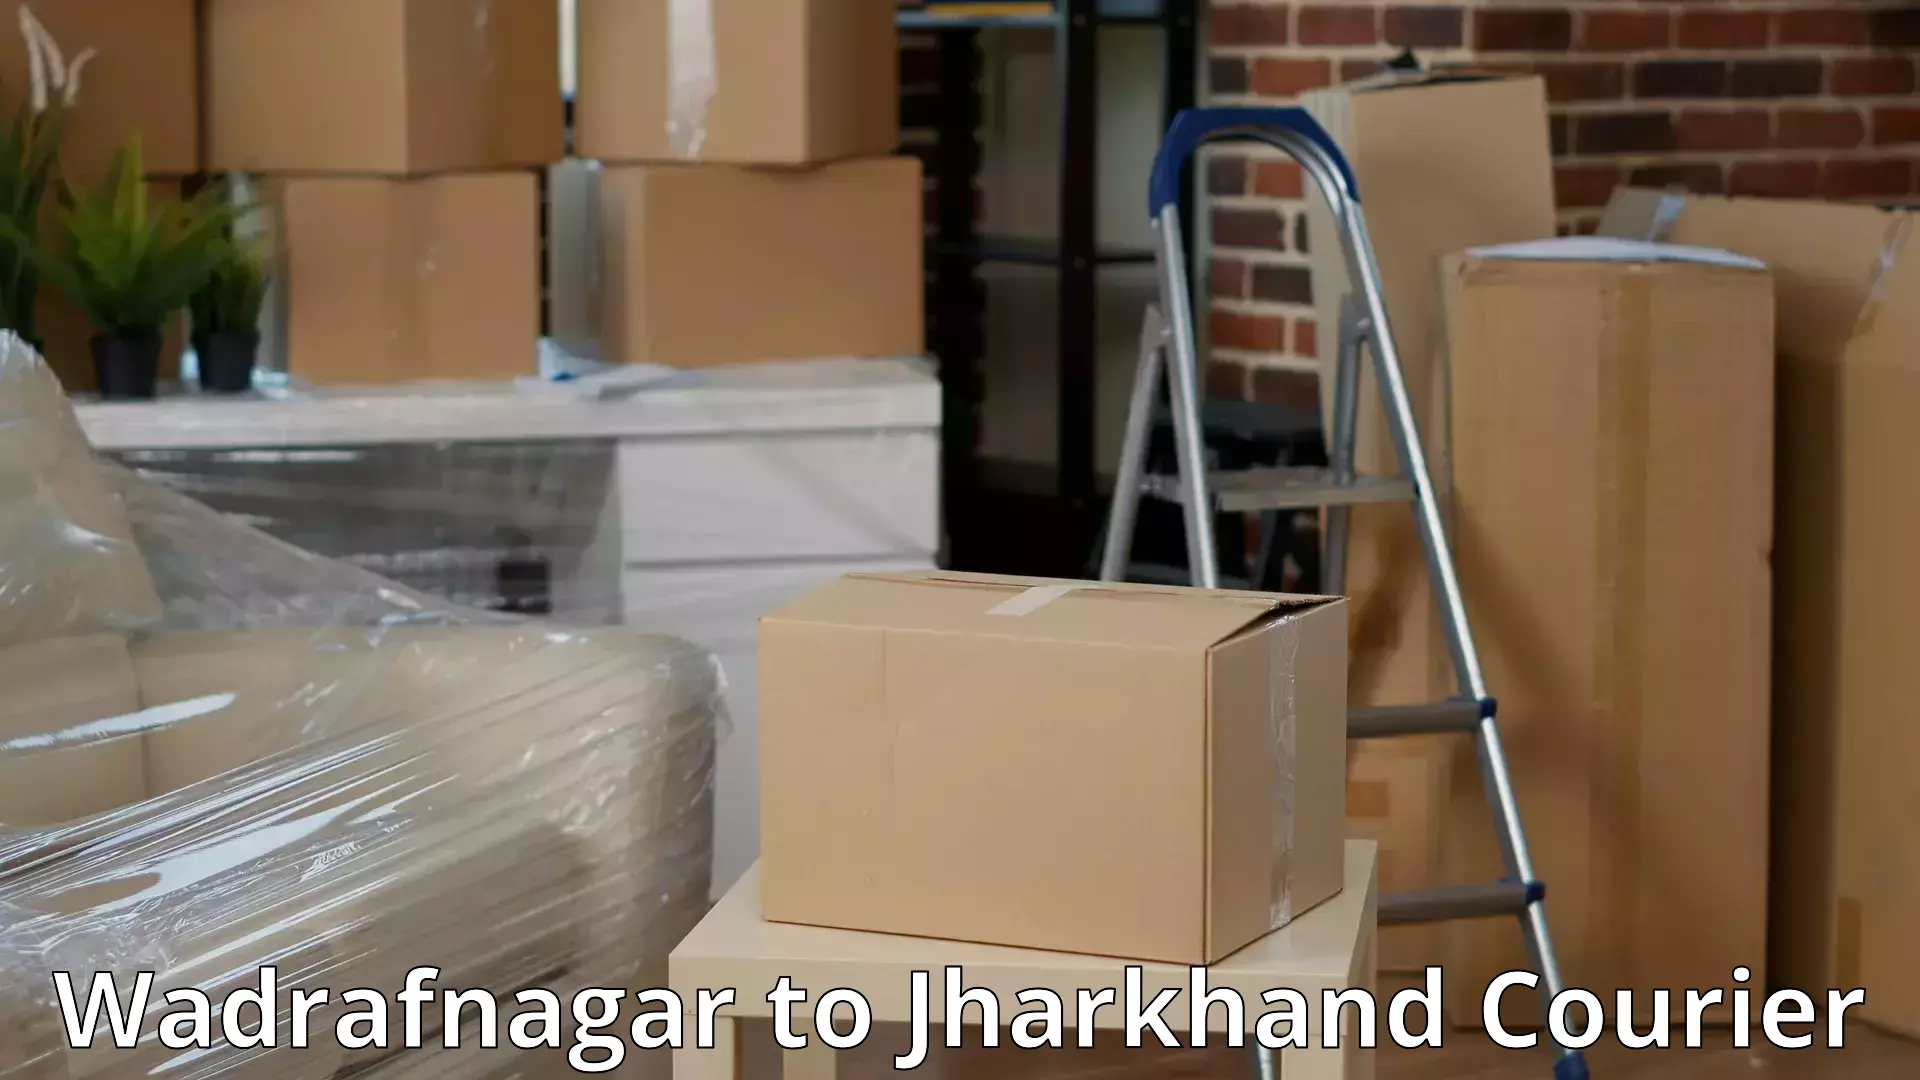 Professional packing services Wadrafnagar to Hazaribagh